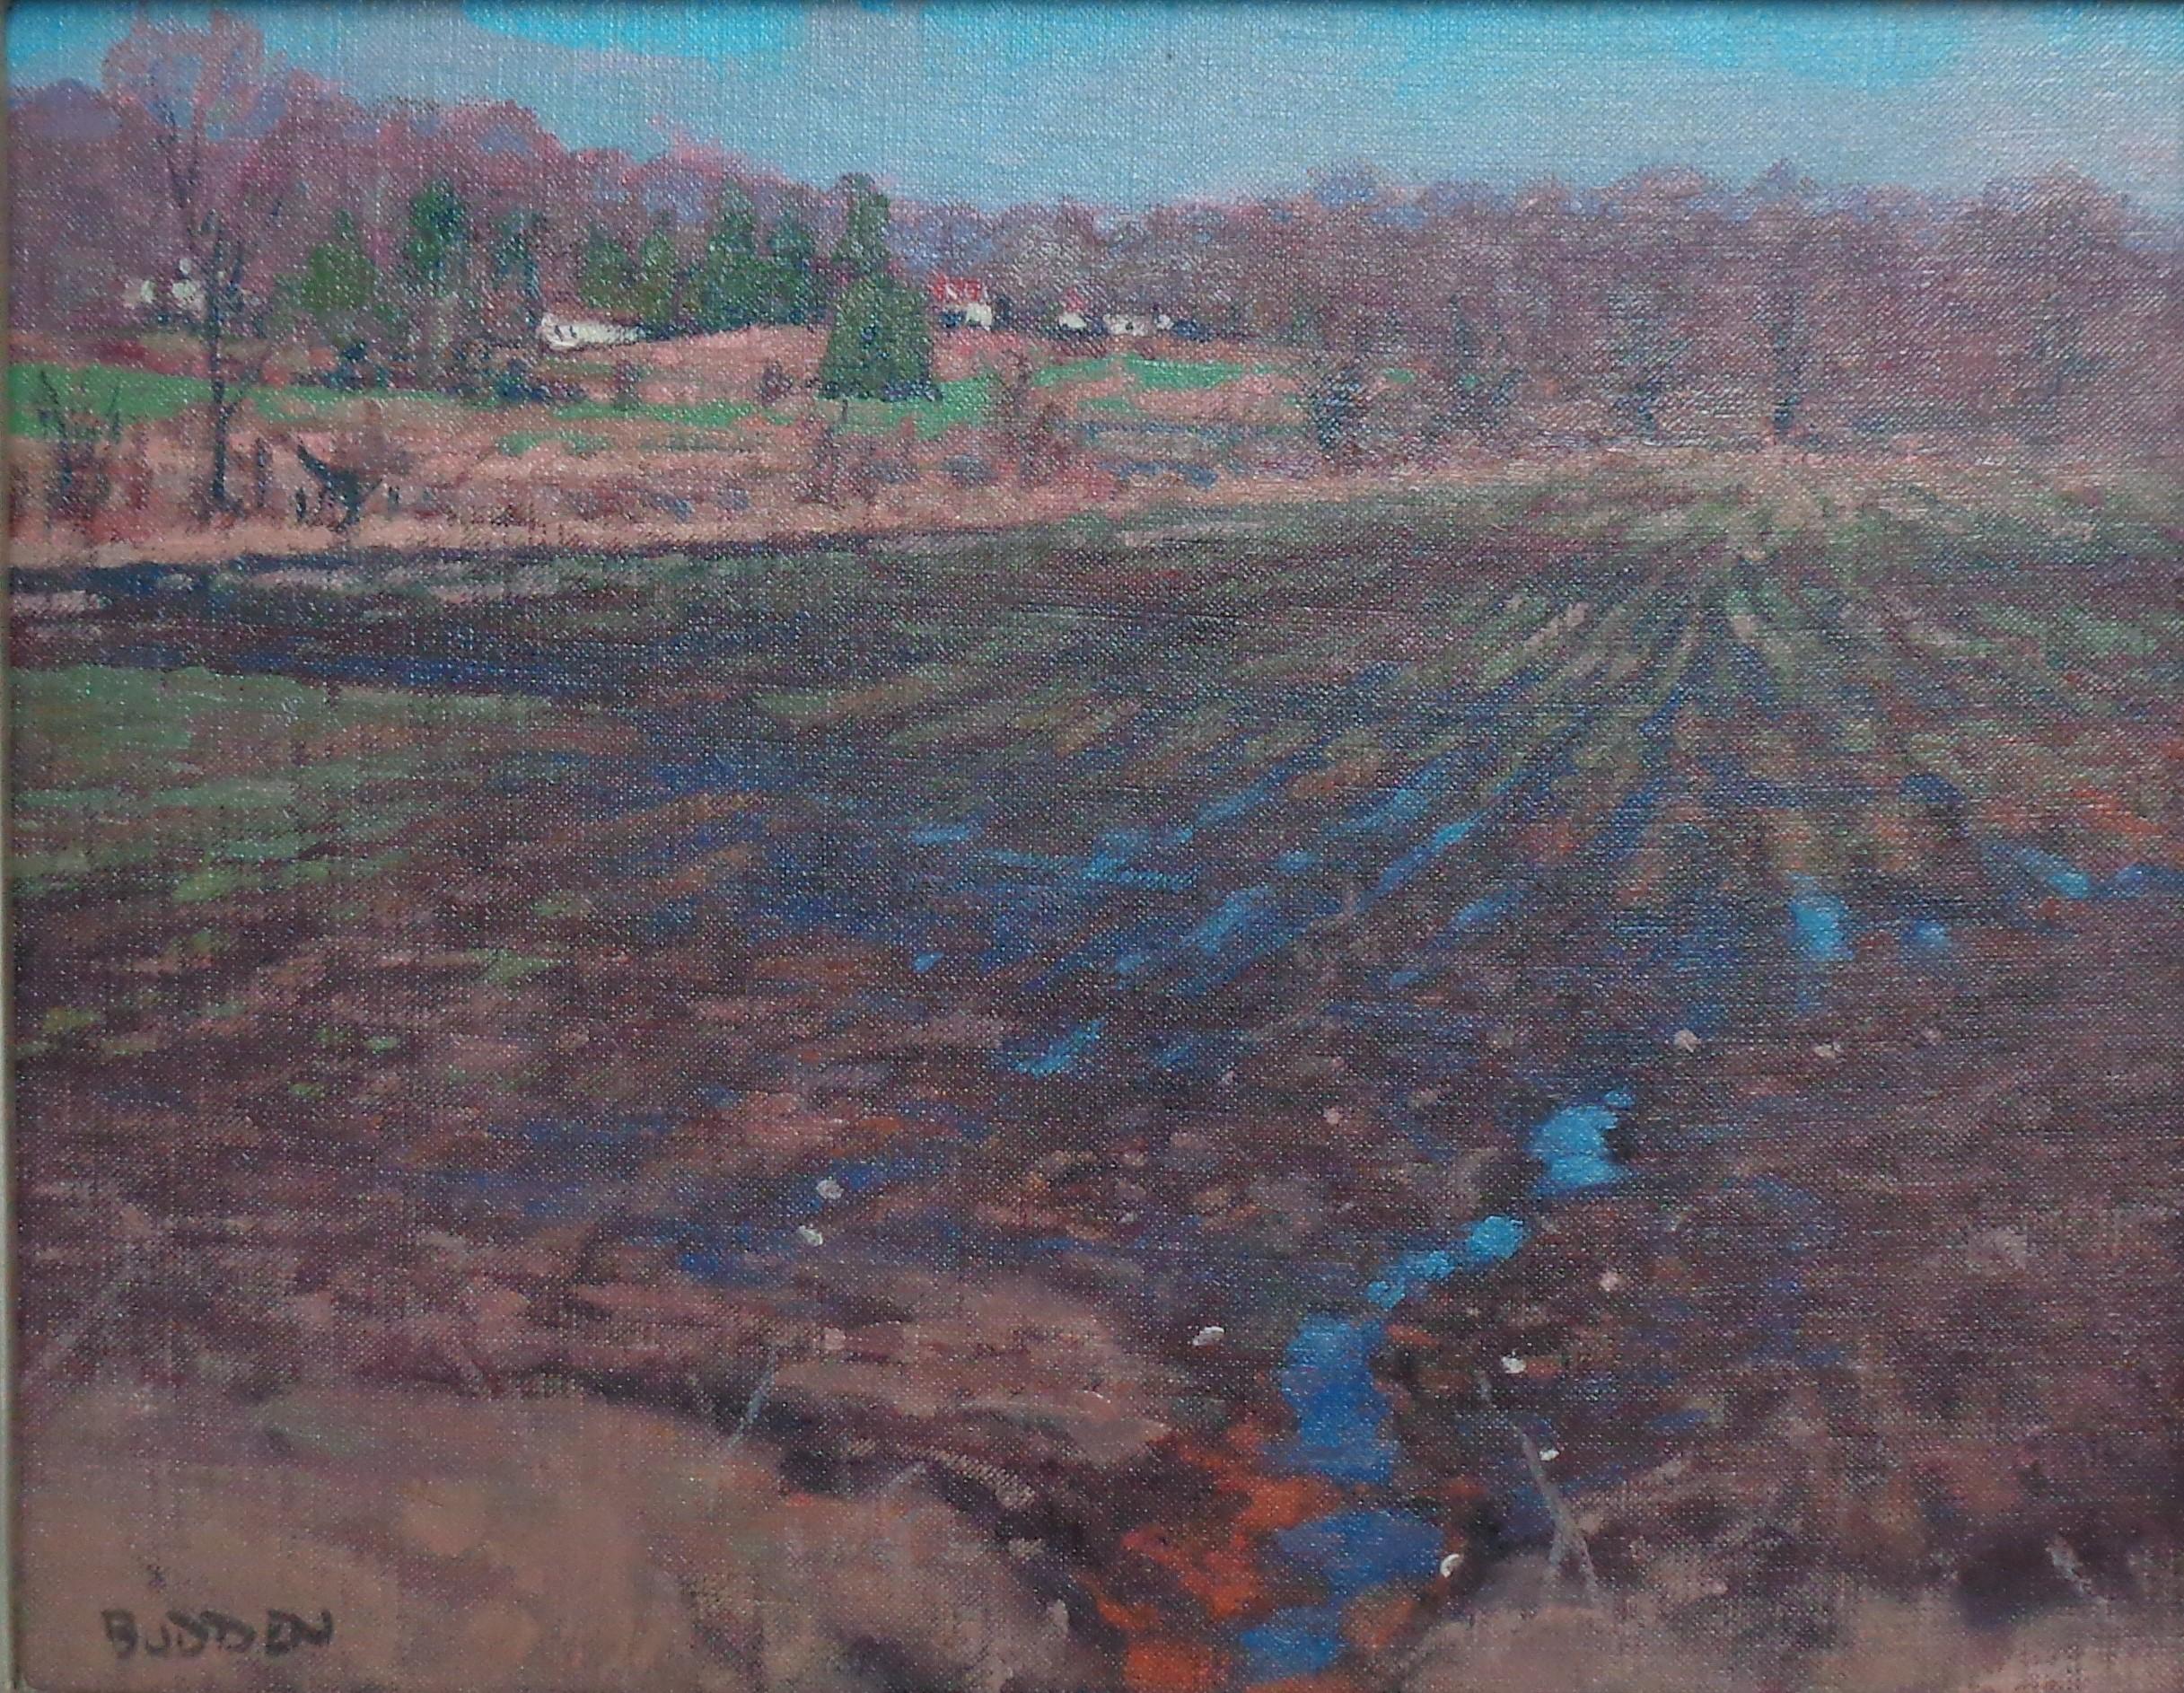  Impressionistic Rural Landscape Oil Painting Michael Budden Farm Fields For Sale 1